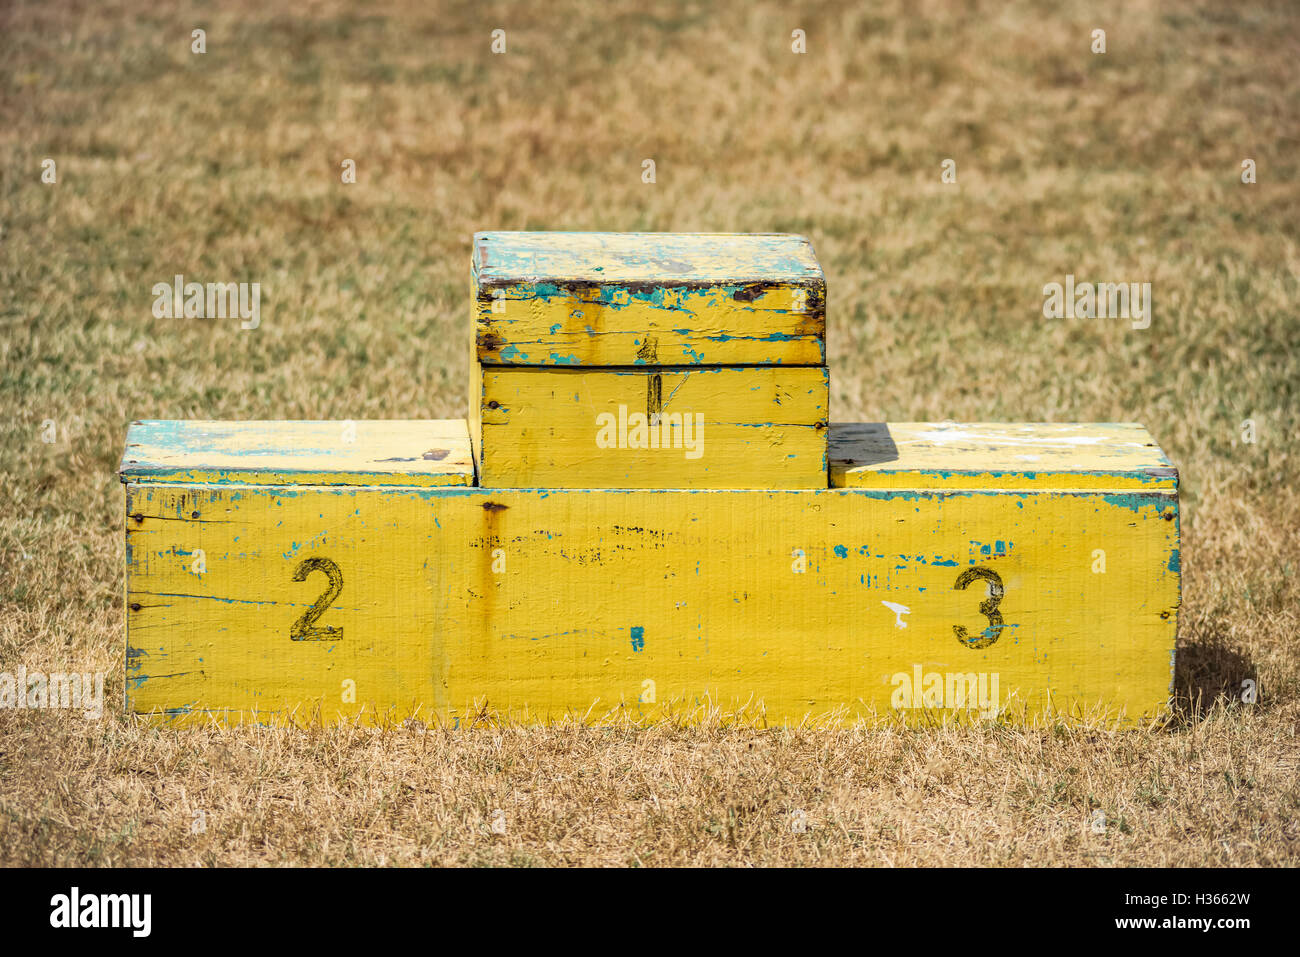 Artesanal de madera exterior amarillo podio pedestal ceremonia concurso deportes posición vacía Foto de stock